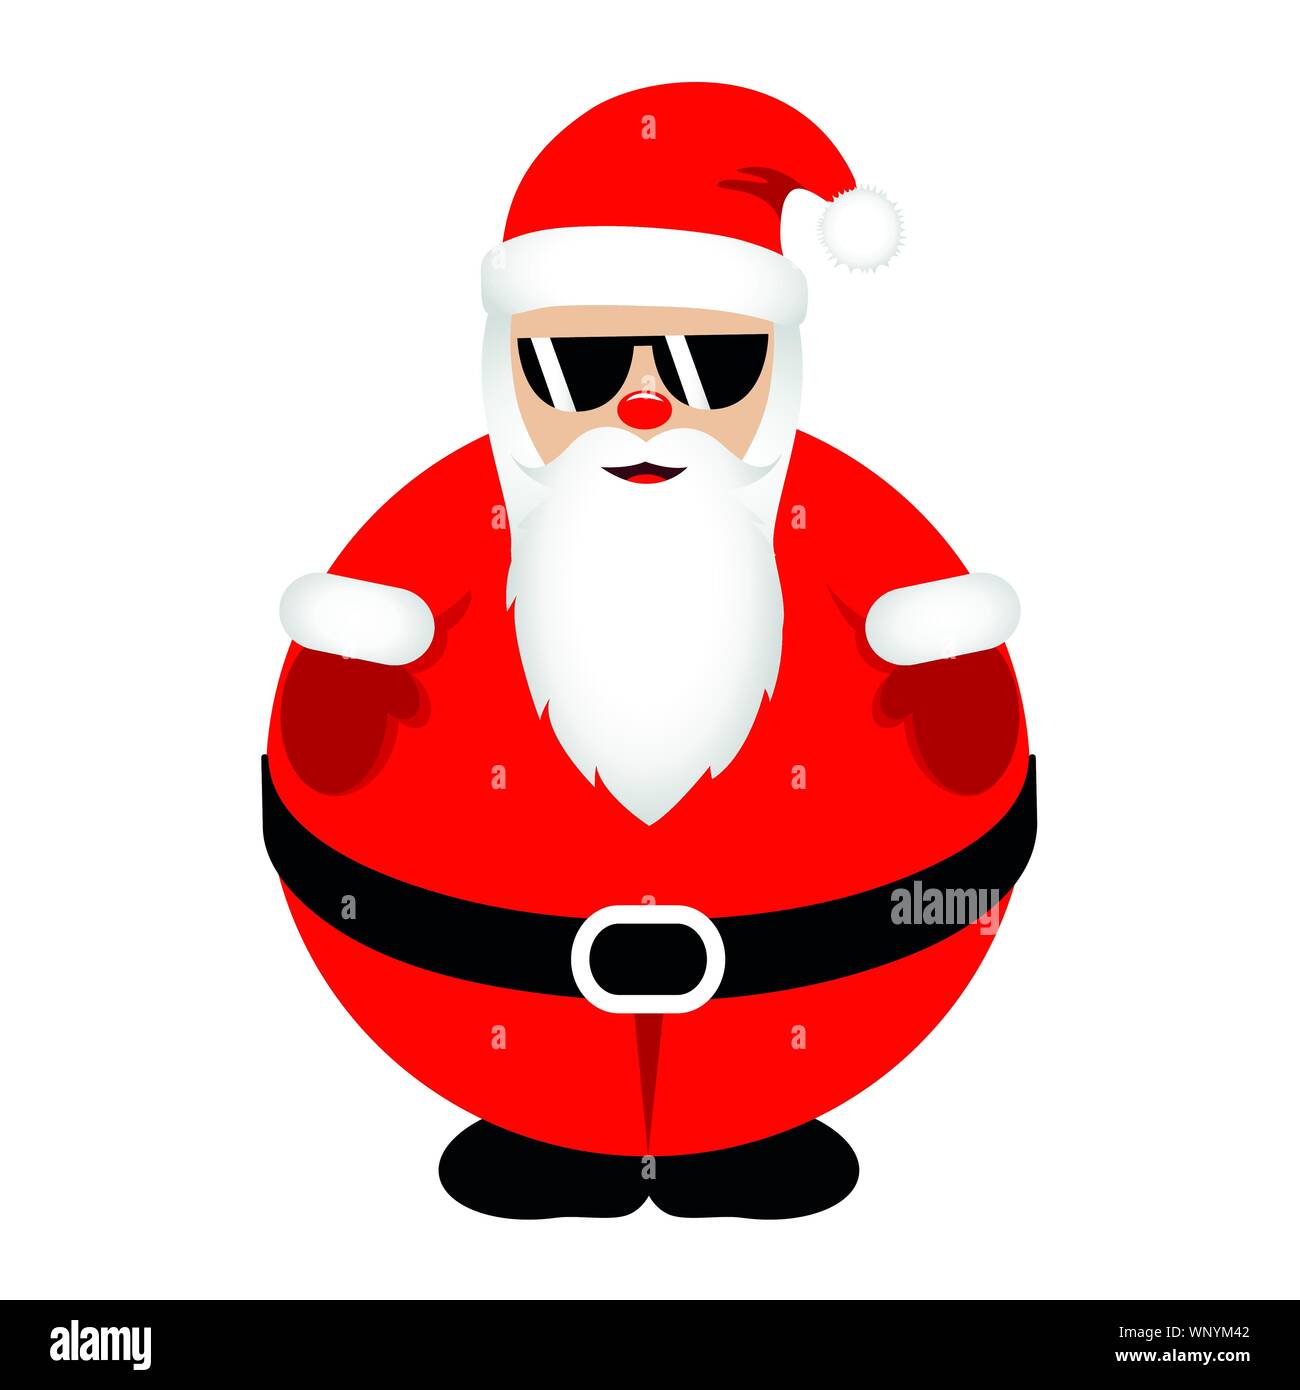 Fett abkühlen Santa Claus in roter Kleidung mit Sonnenbrille Vektor-illustration EPS 10. Stock Vektor